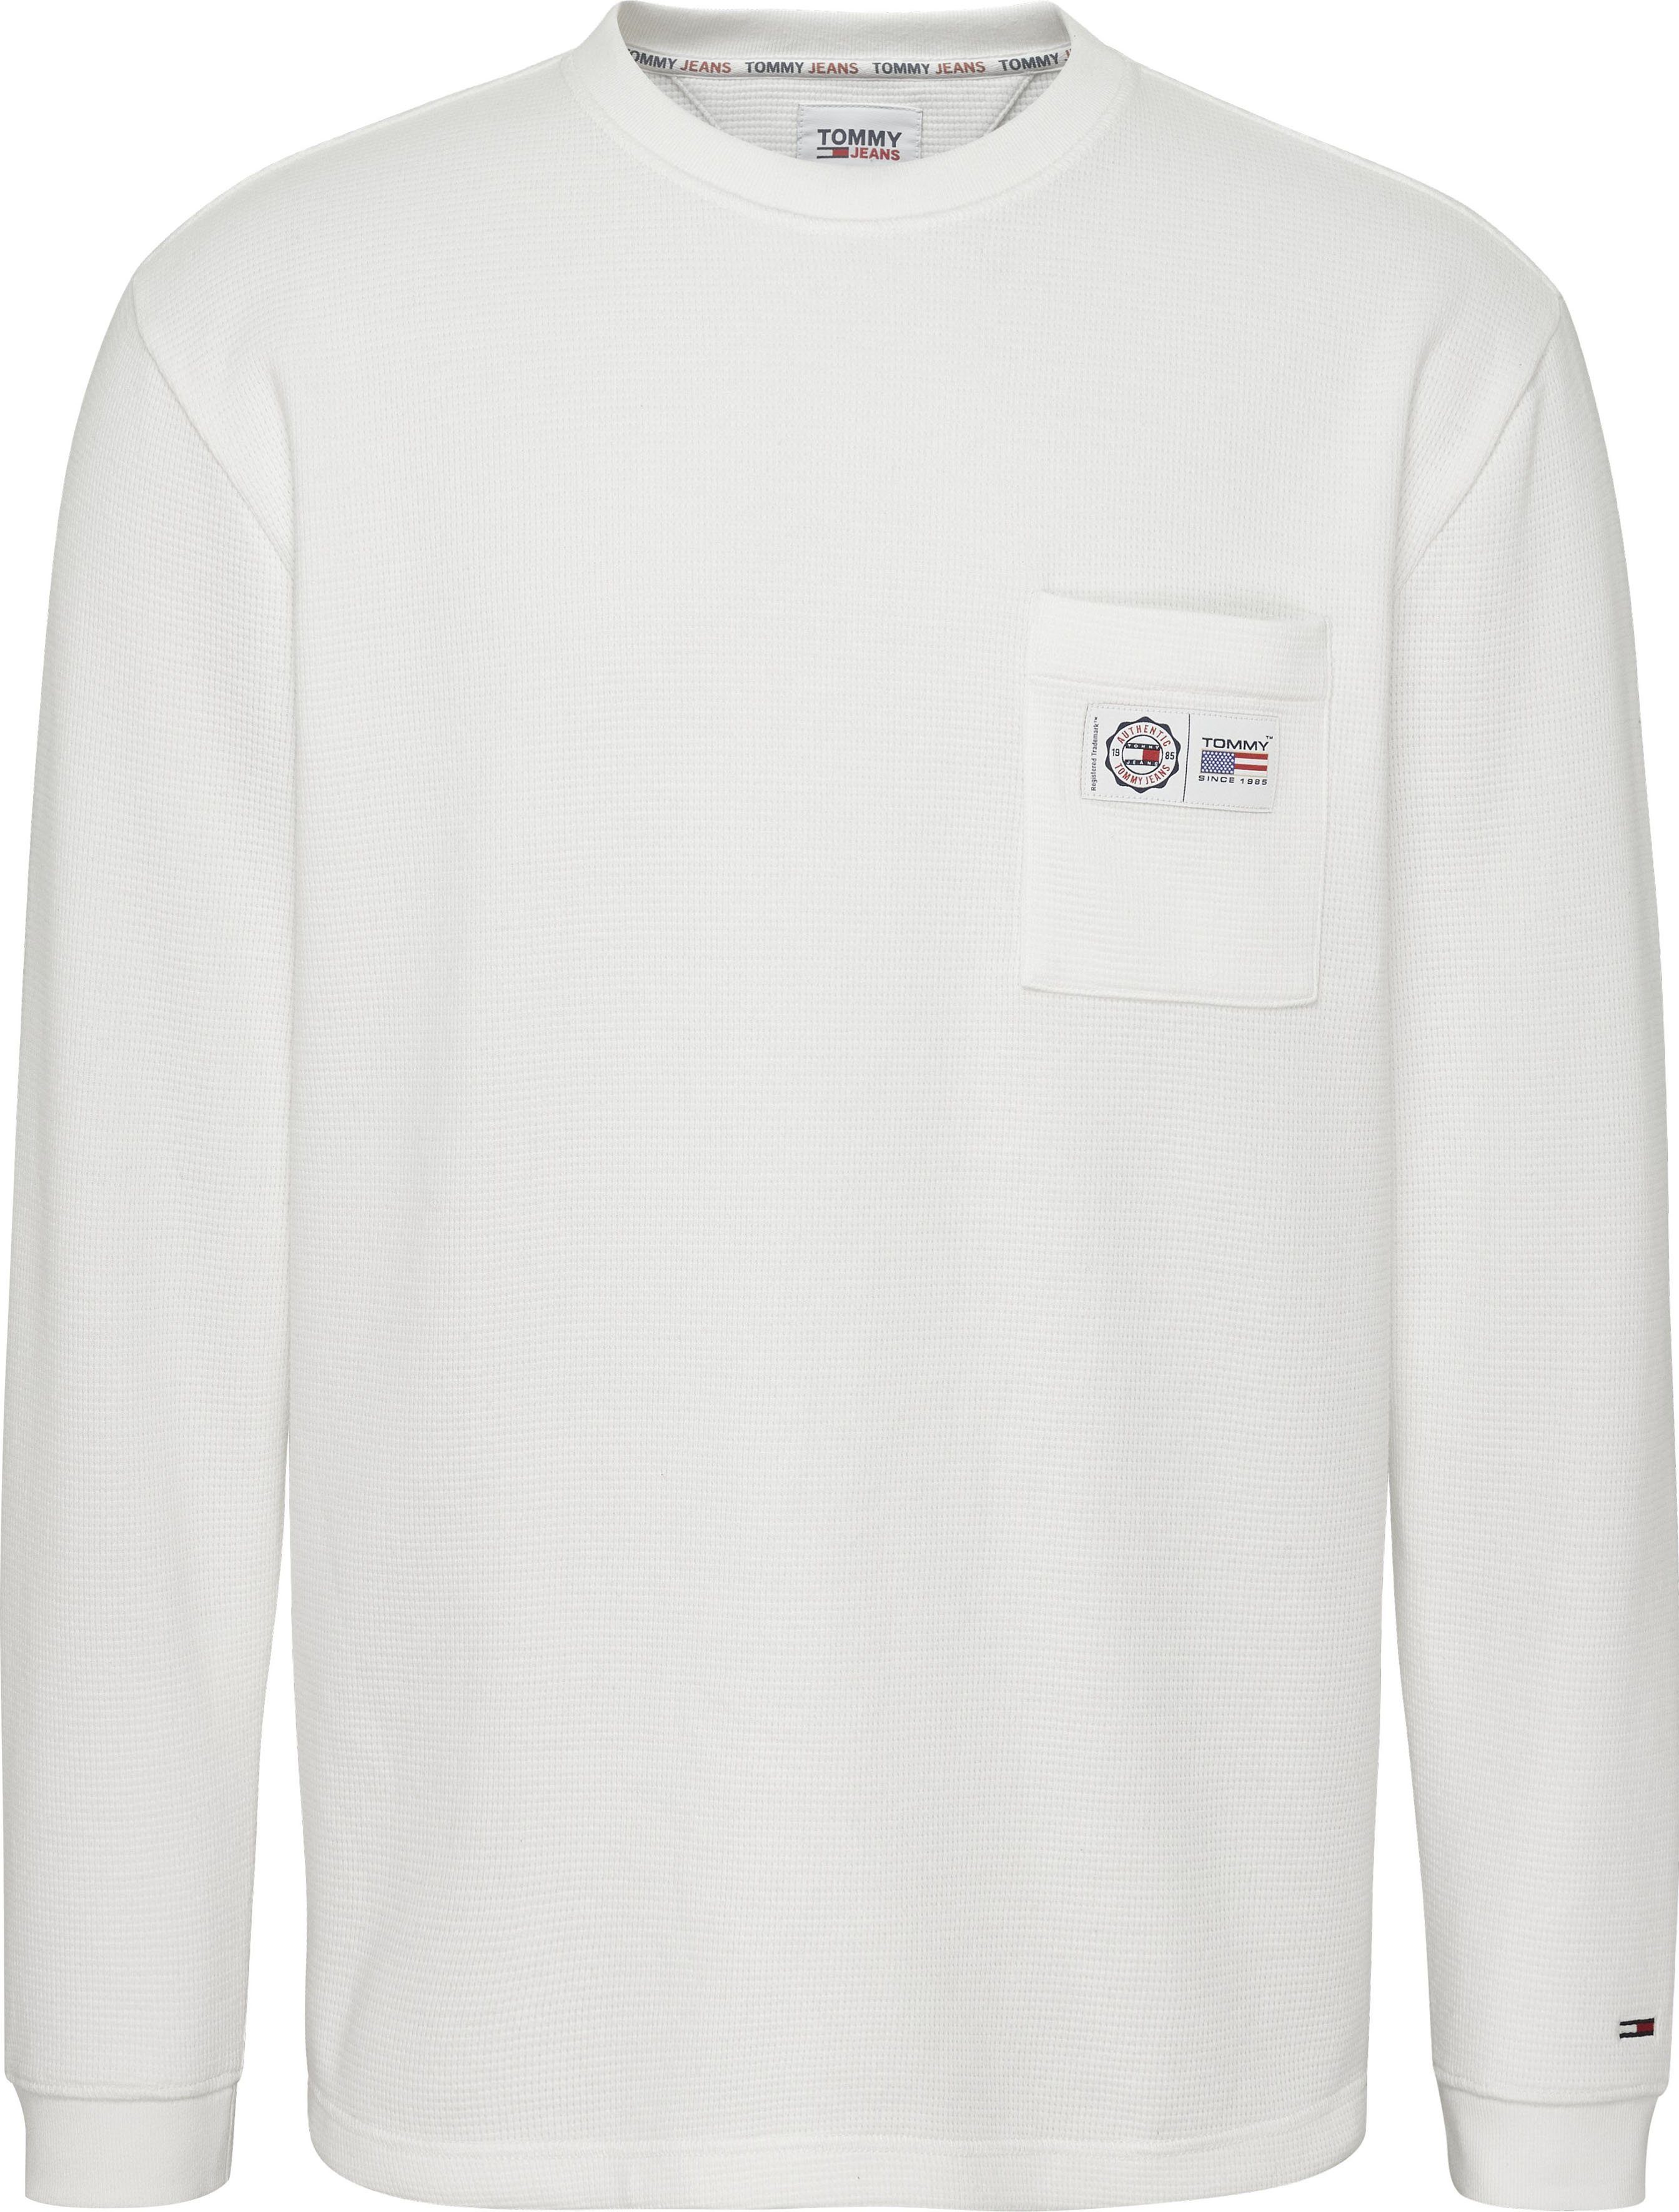 TJM White SOFT Langarmshirt mit LS CLSC SNIT Tommy Jeans Markenlabel